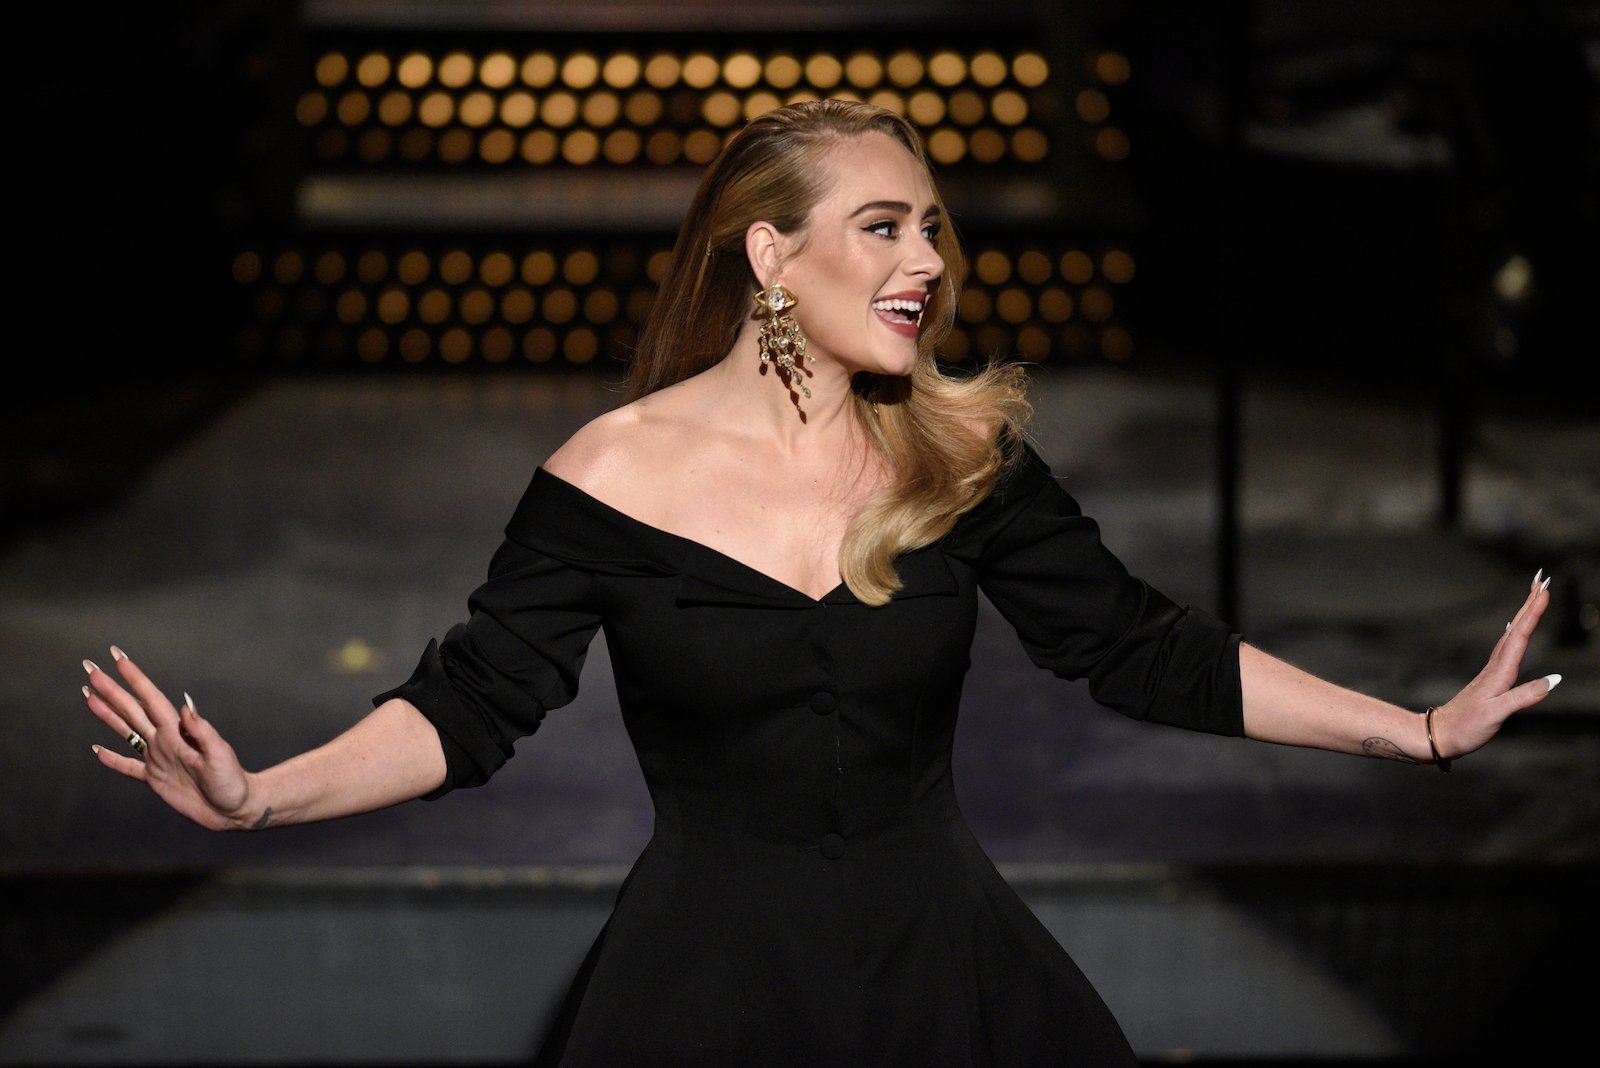 30 artist Adele on 'Saturday Night Live'